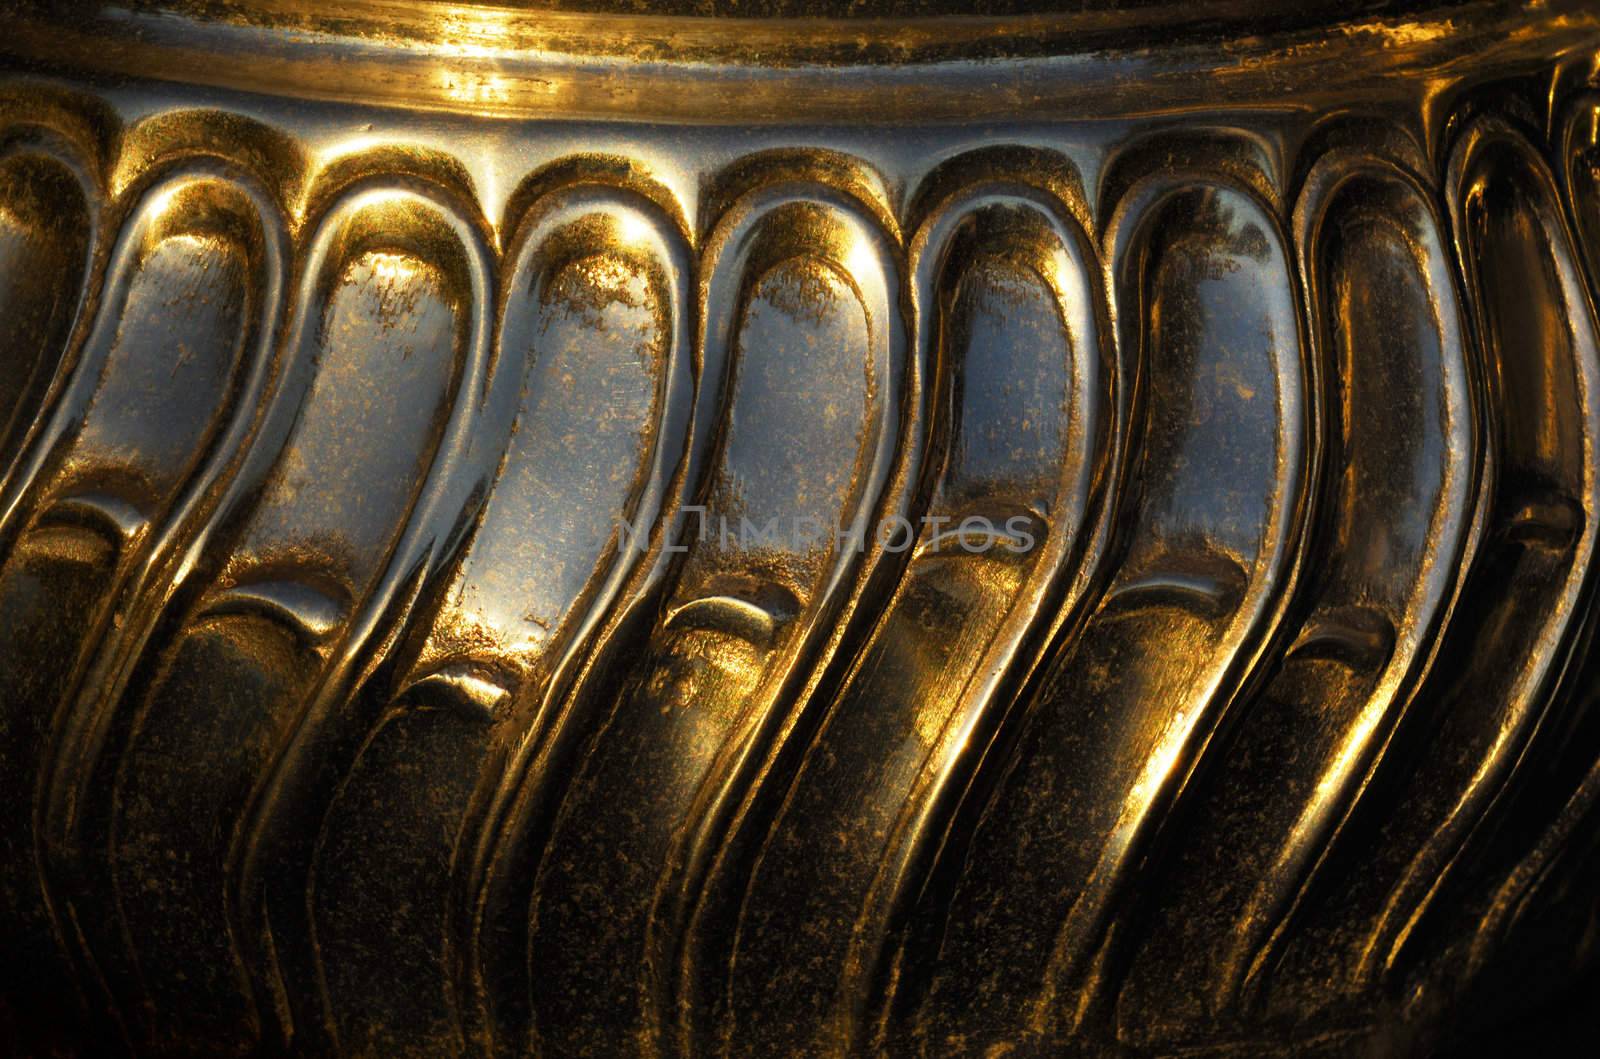 Metallic bowl by akarelias